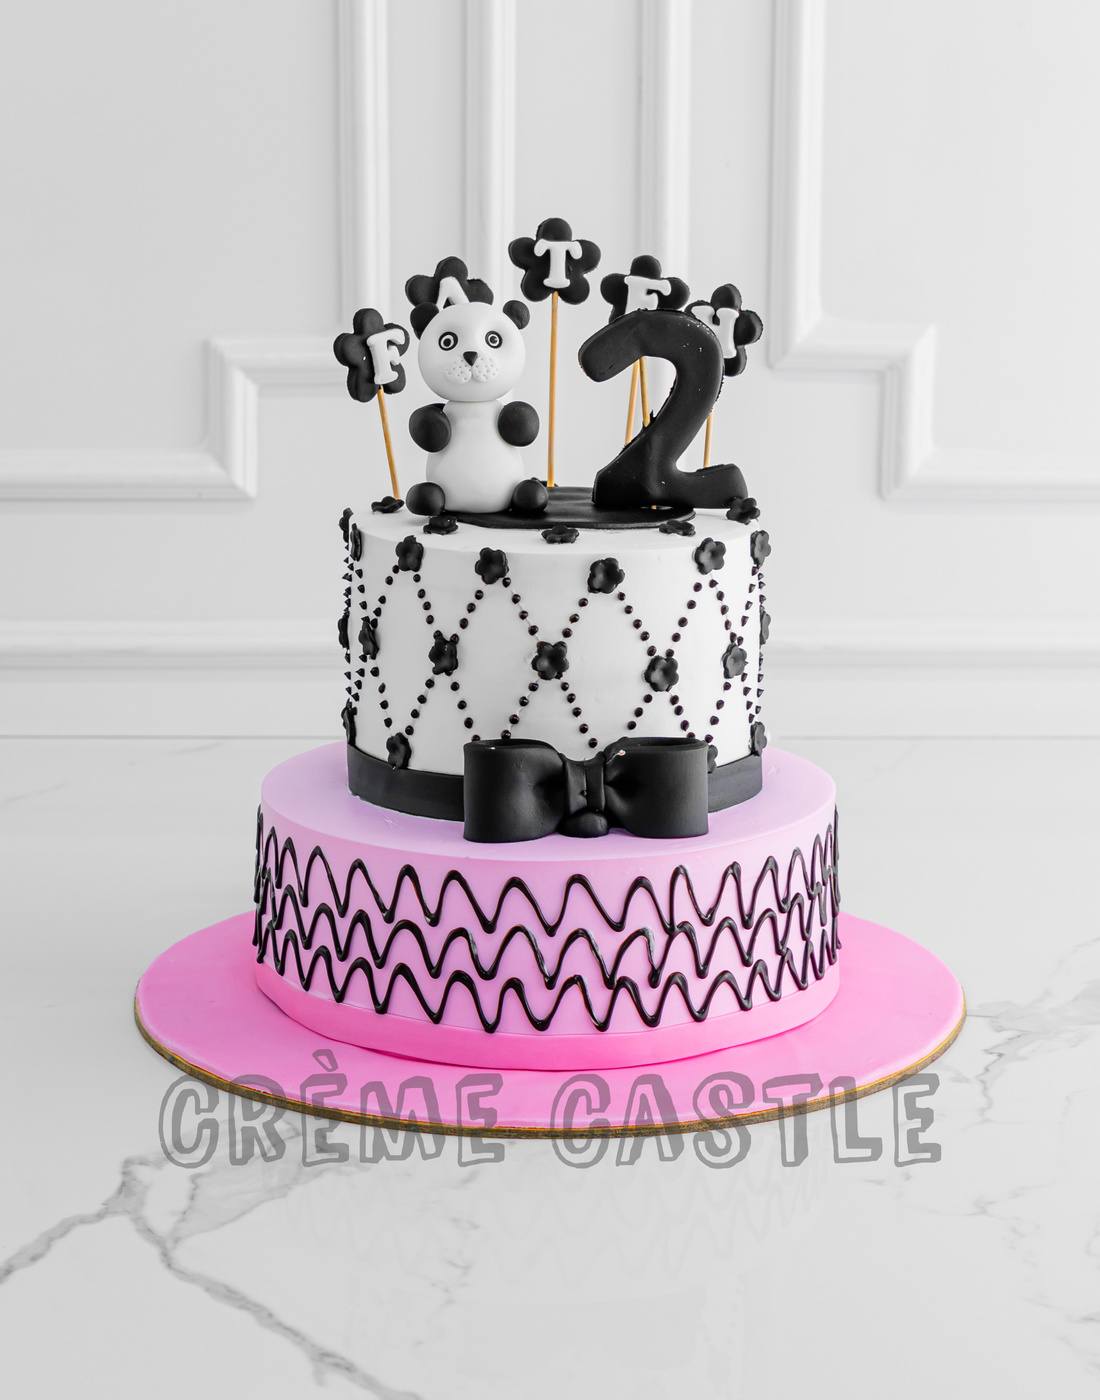 Happy Birthday Cakes - Amazing Panda birthday cake #cute #beauty #stylish  #happybirthdaycake #birthdaycakephoto #jungle | Facebook